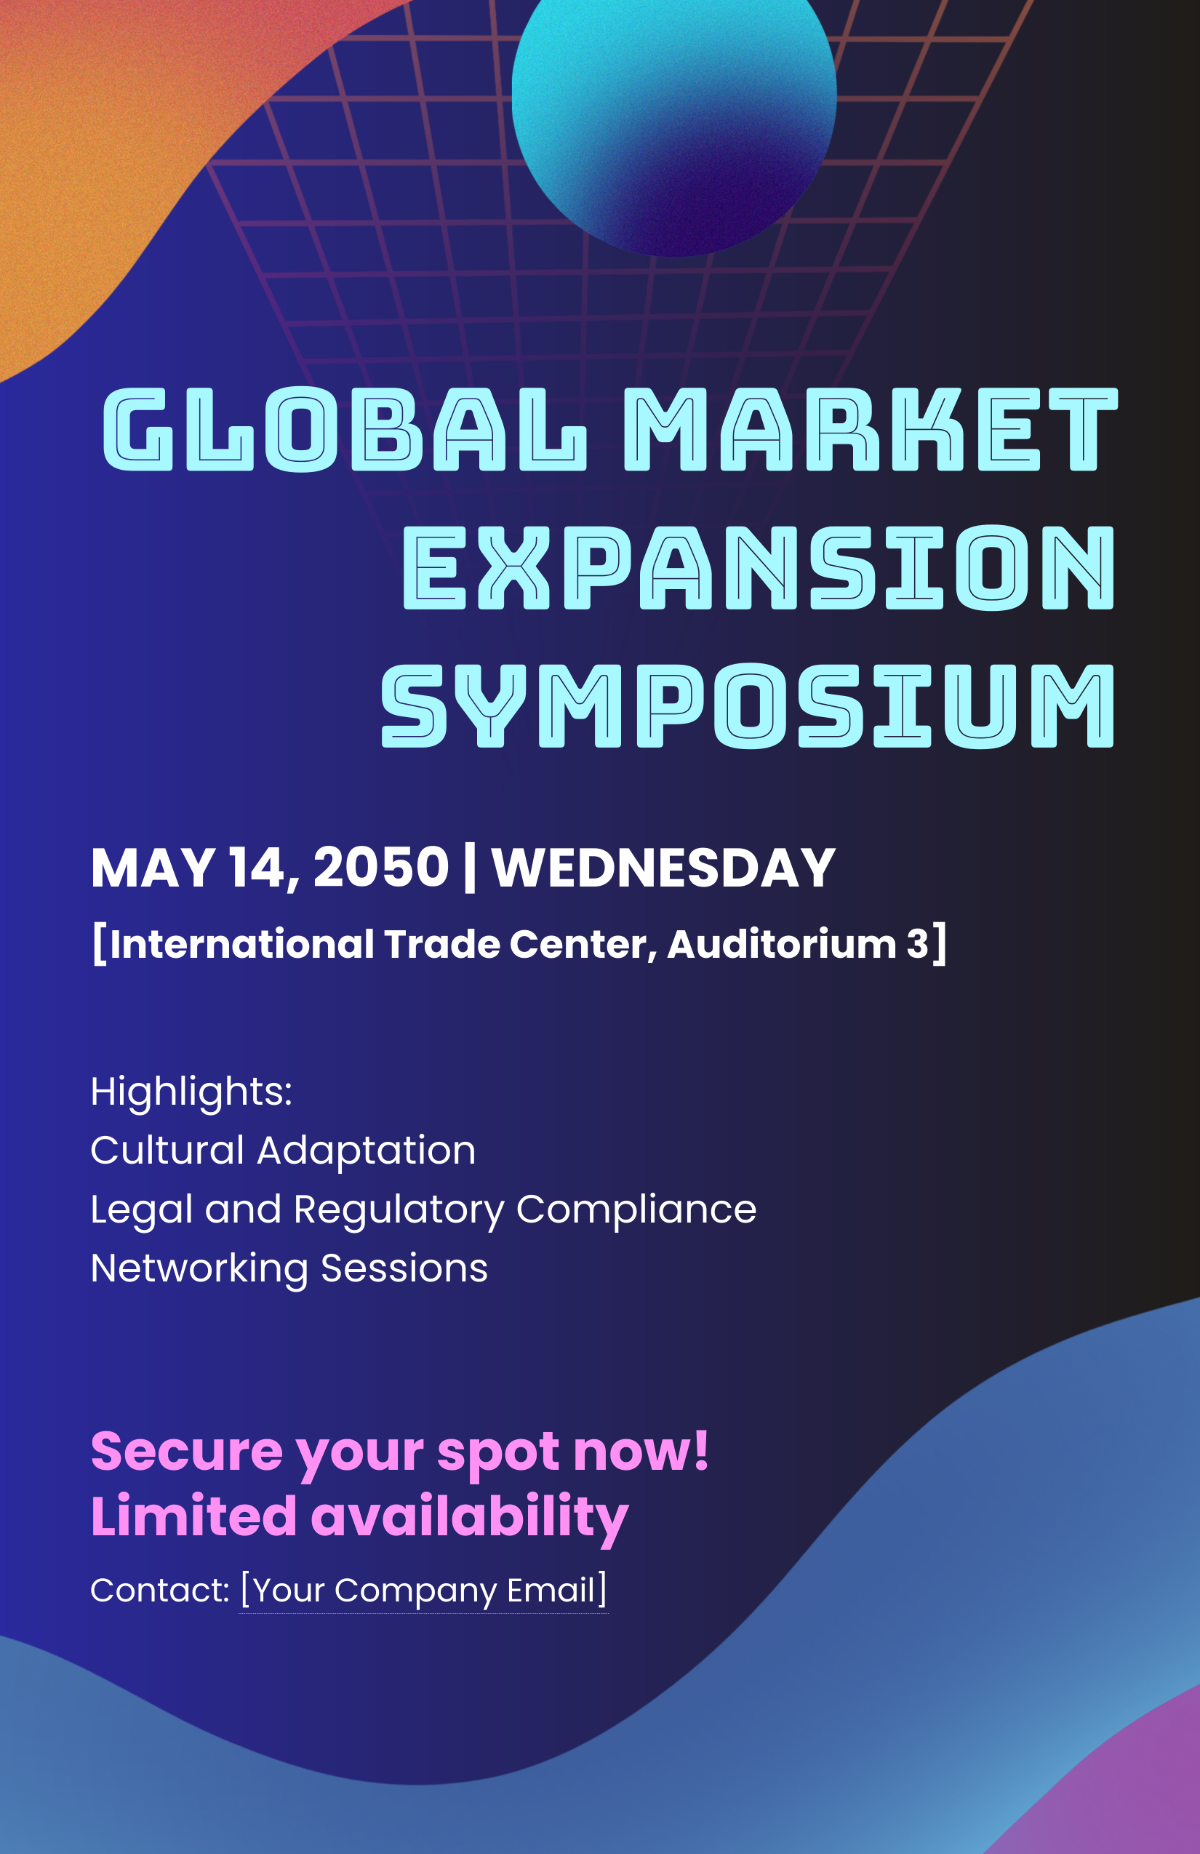 Global Market Expansion Symposium Poster